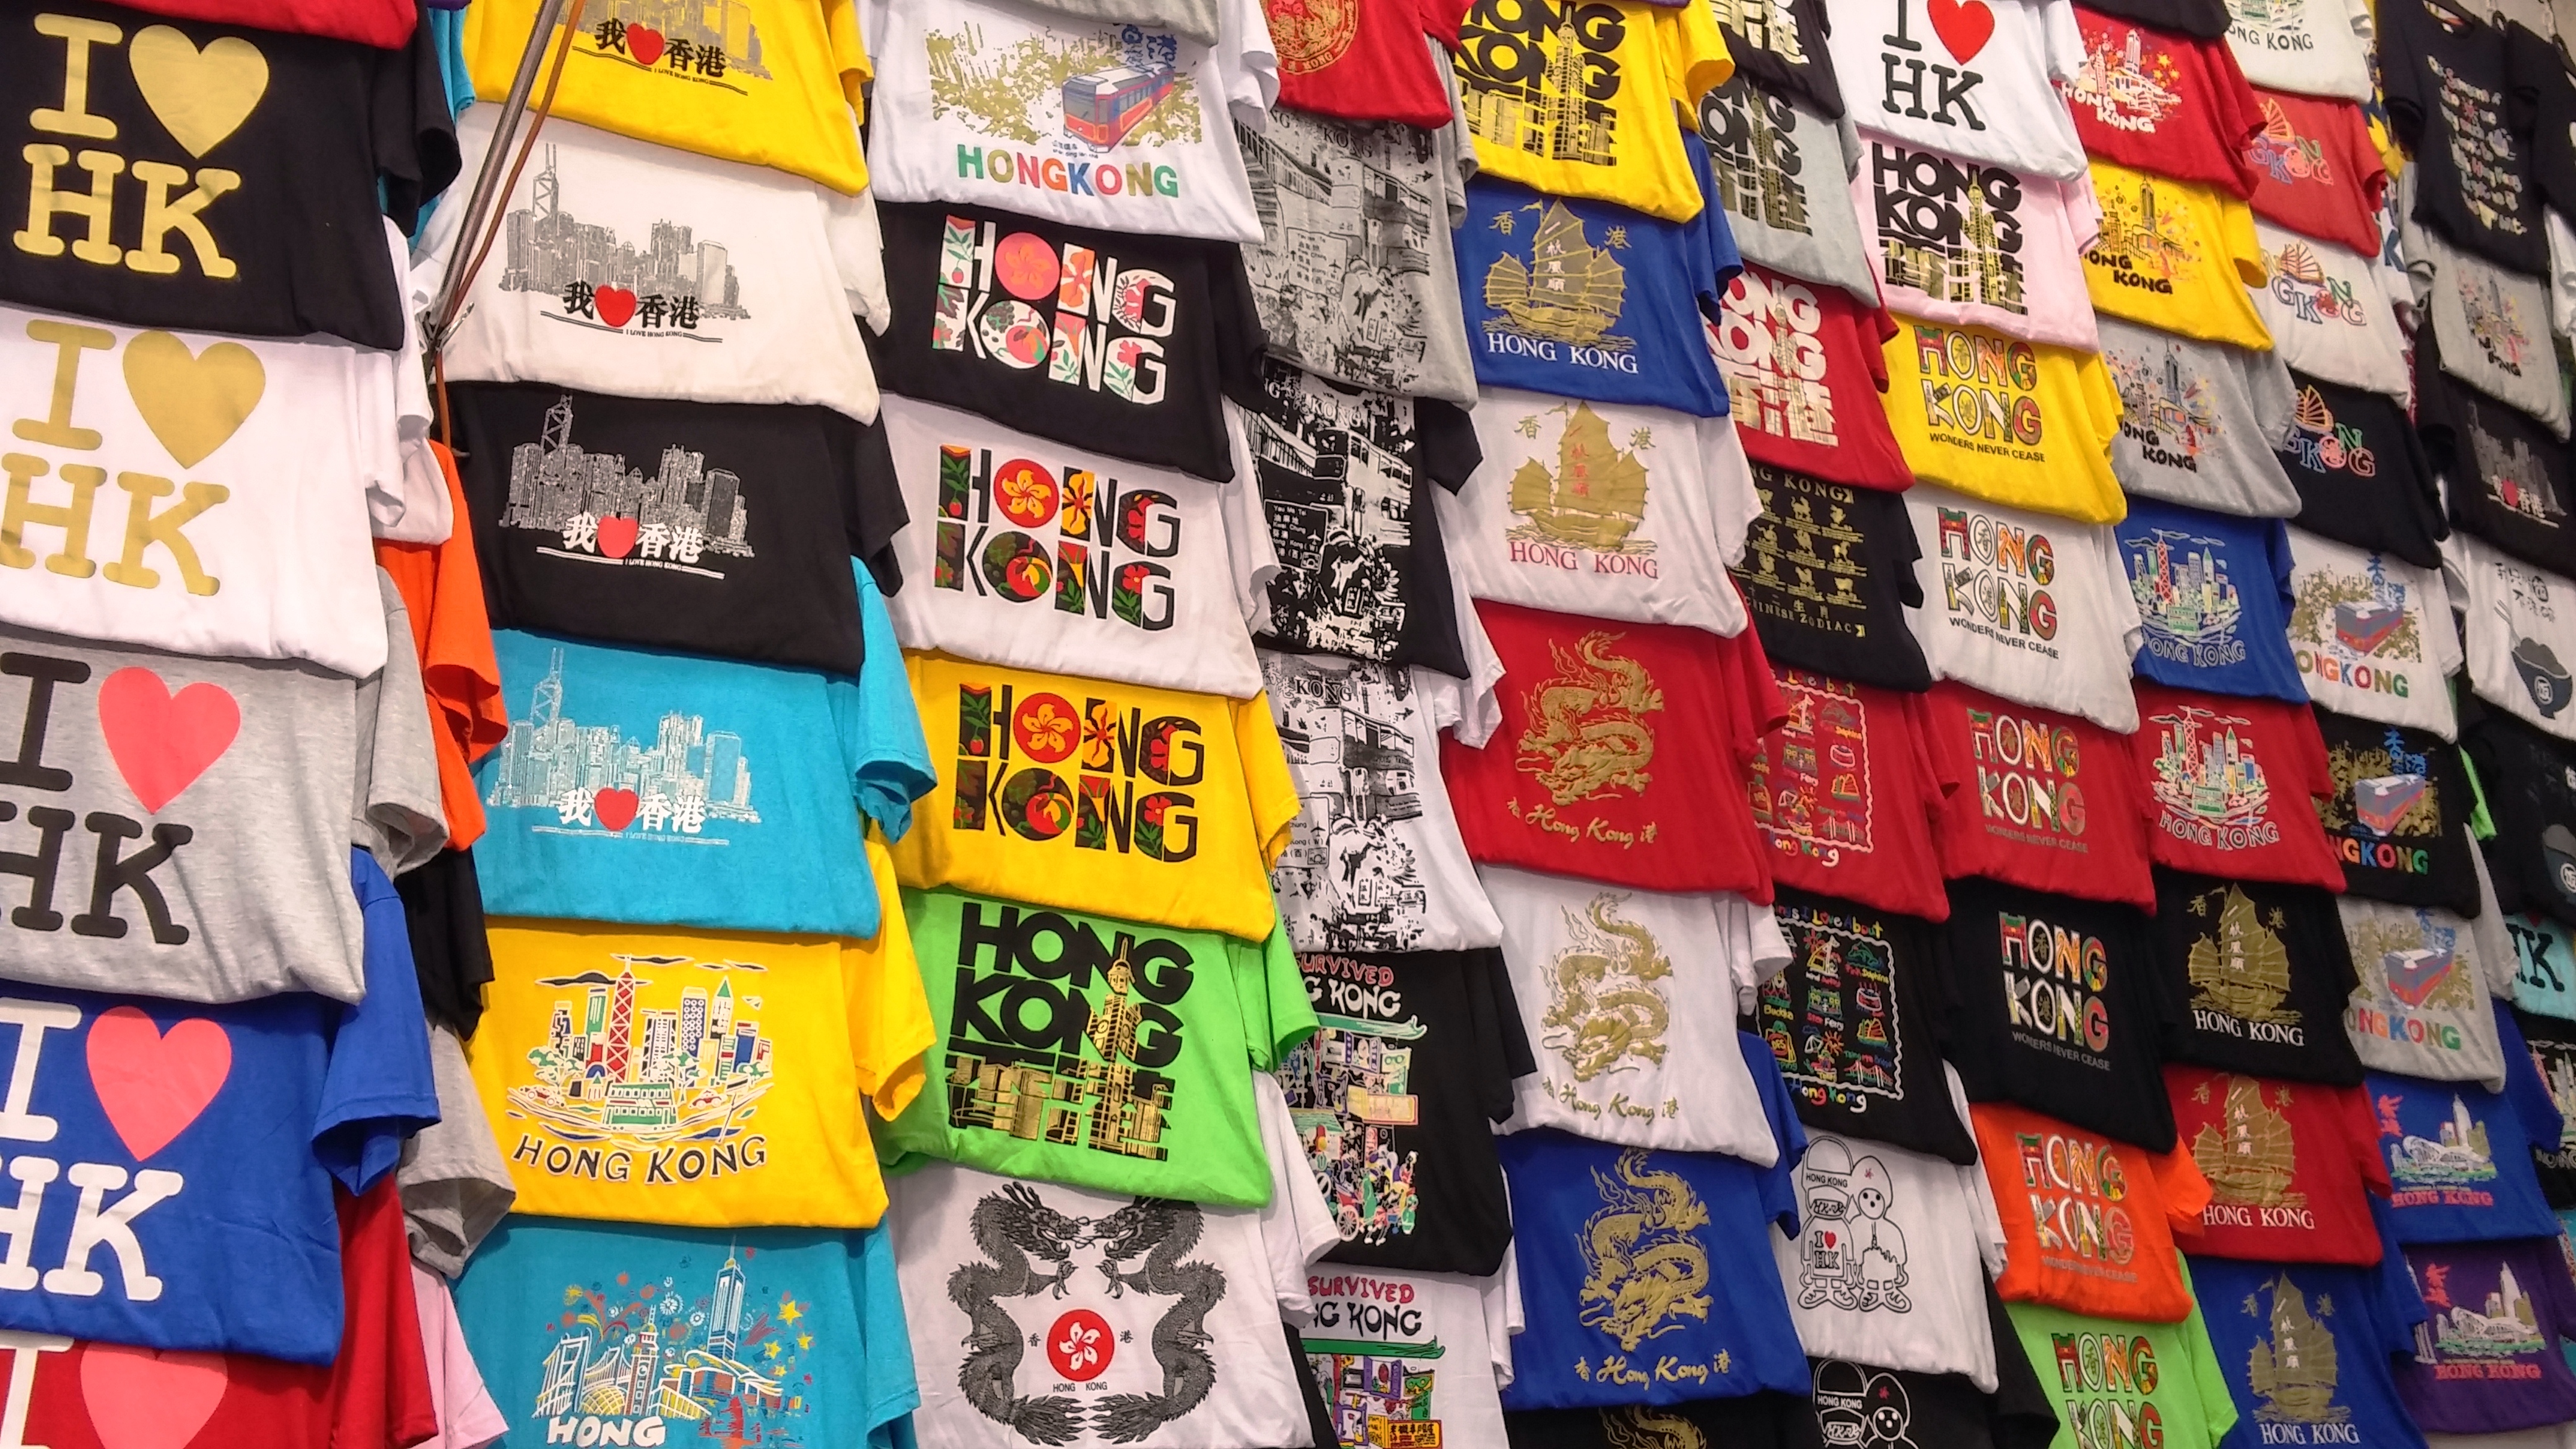 Mong Kok Ladies Market T-shirts stall